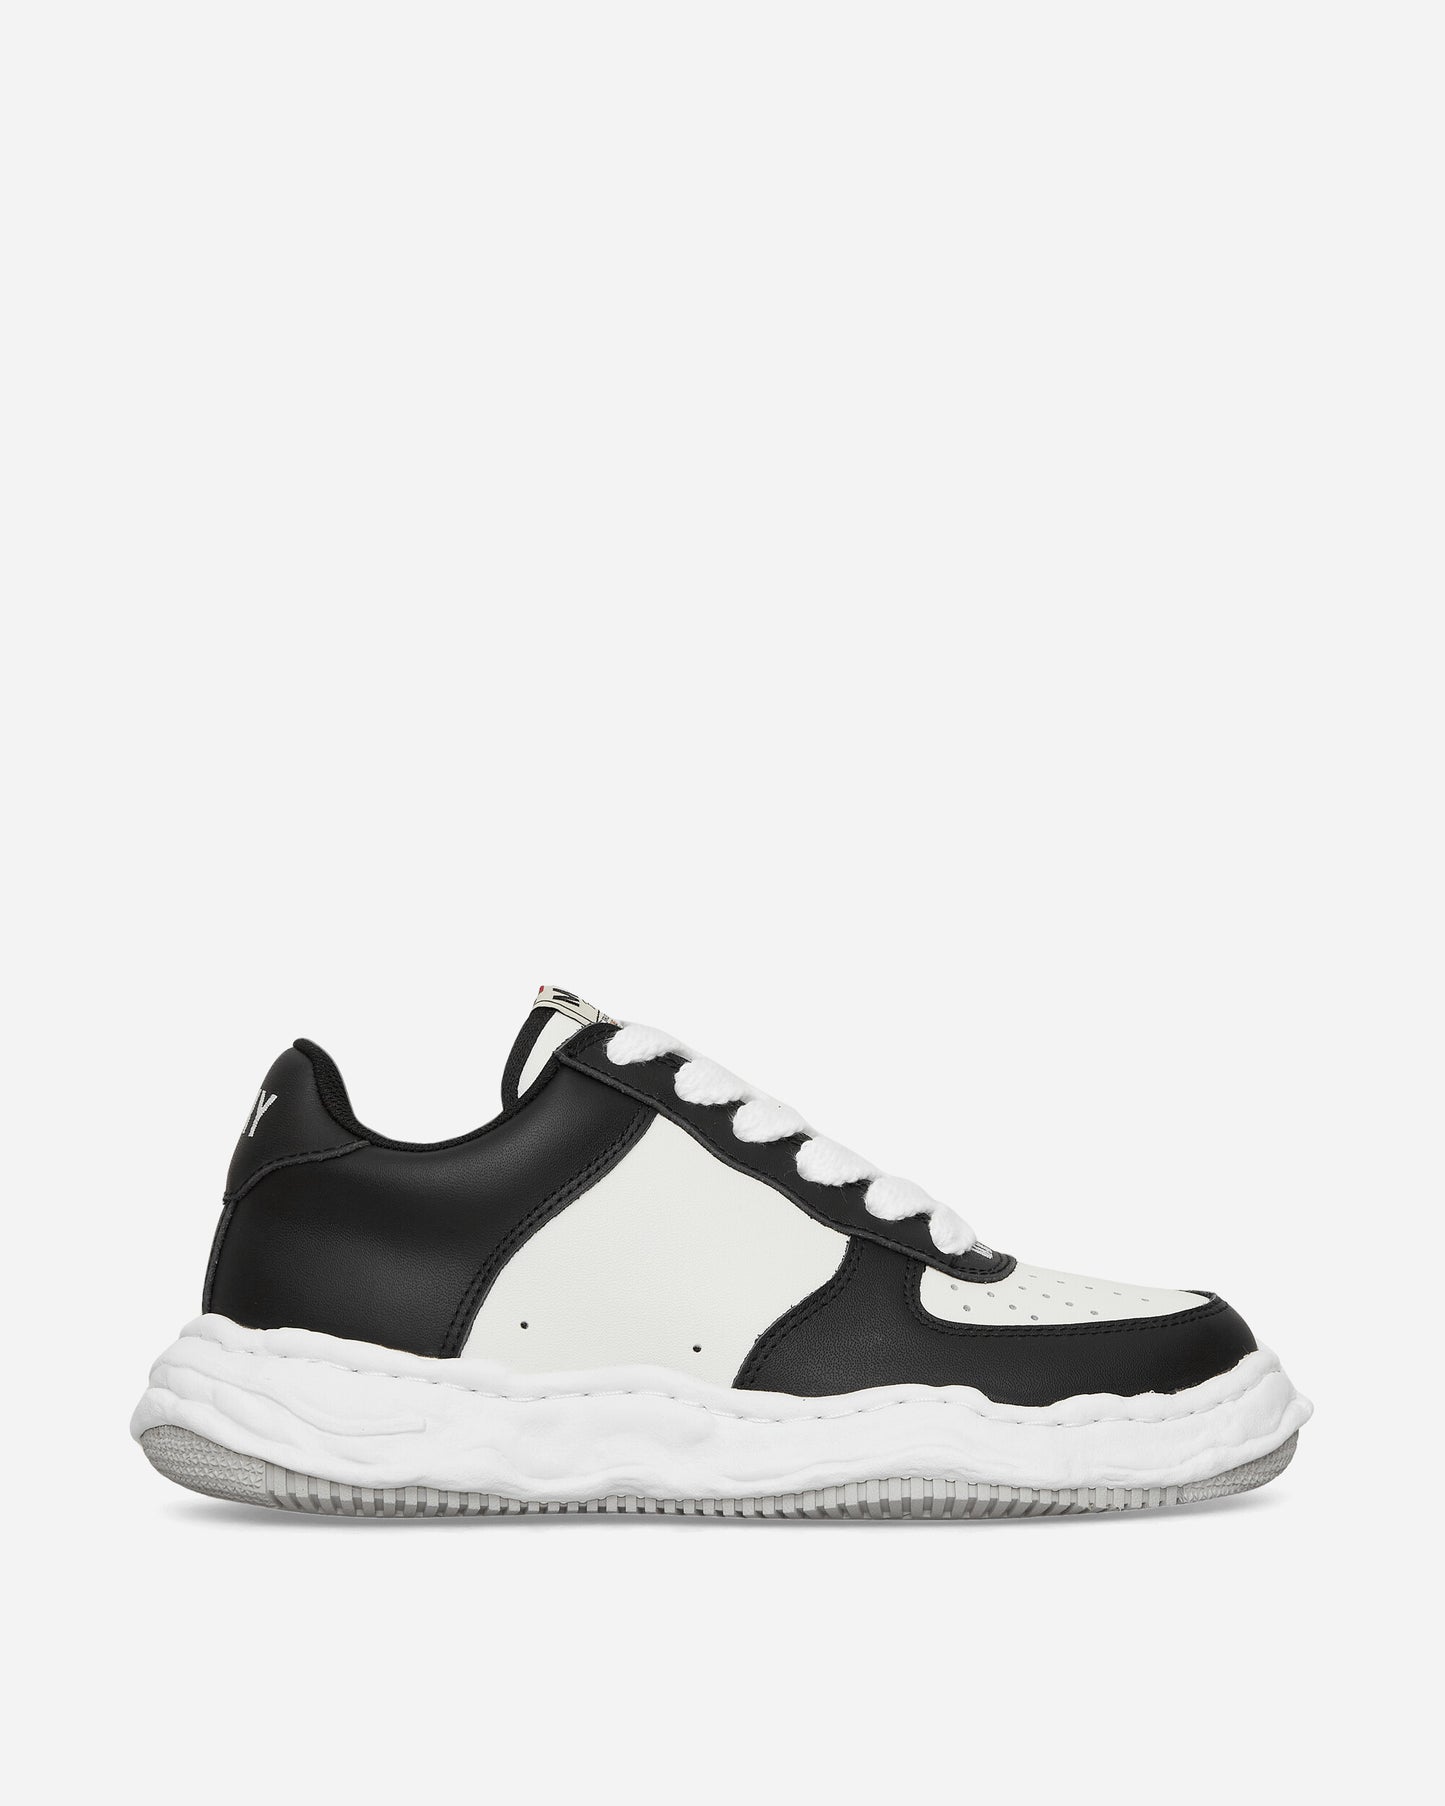 Maison MIHARA YASUHIRO Wayne Low/Original Sole Cow Leather Low-Top Sneaker Black/White Sneakers Low A08FW706 BLACKWHITE